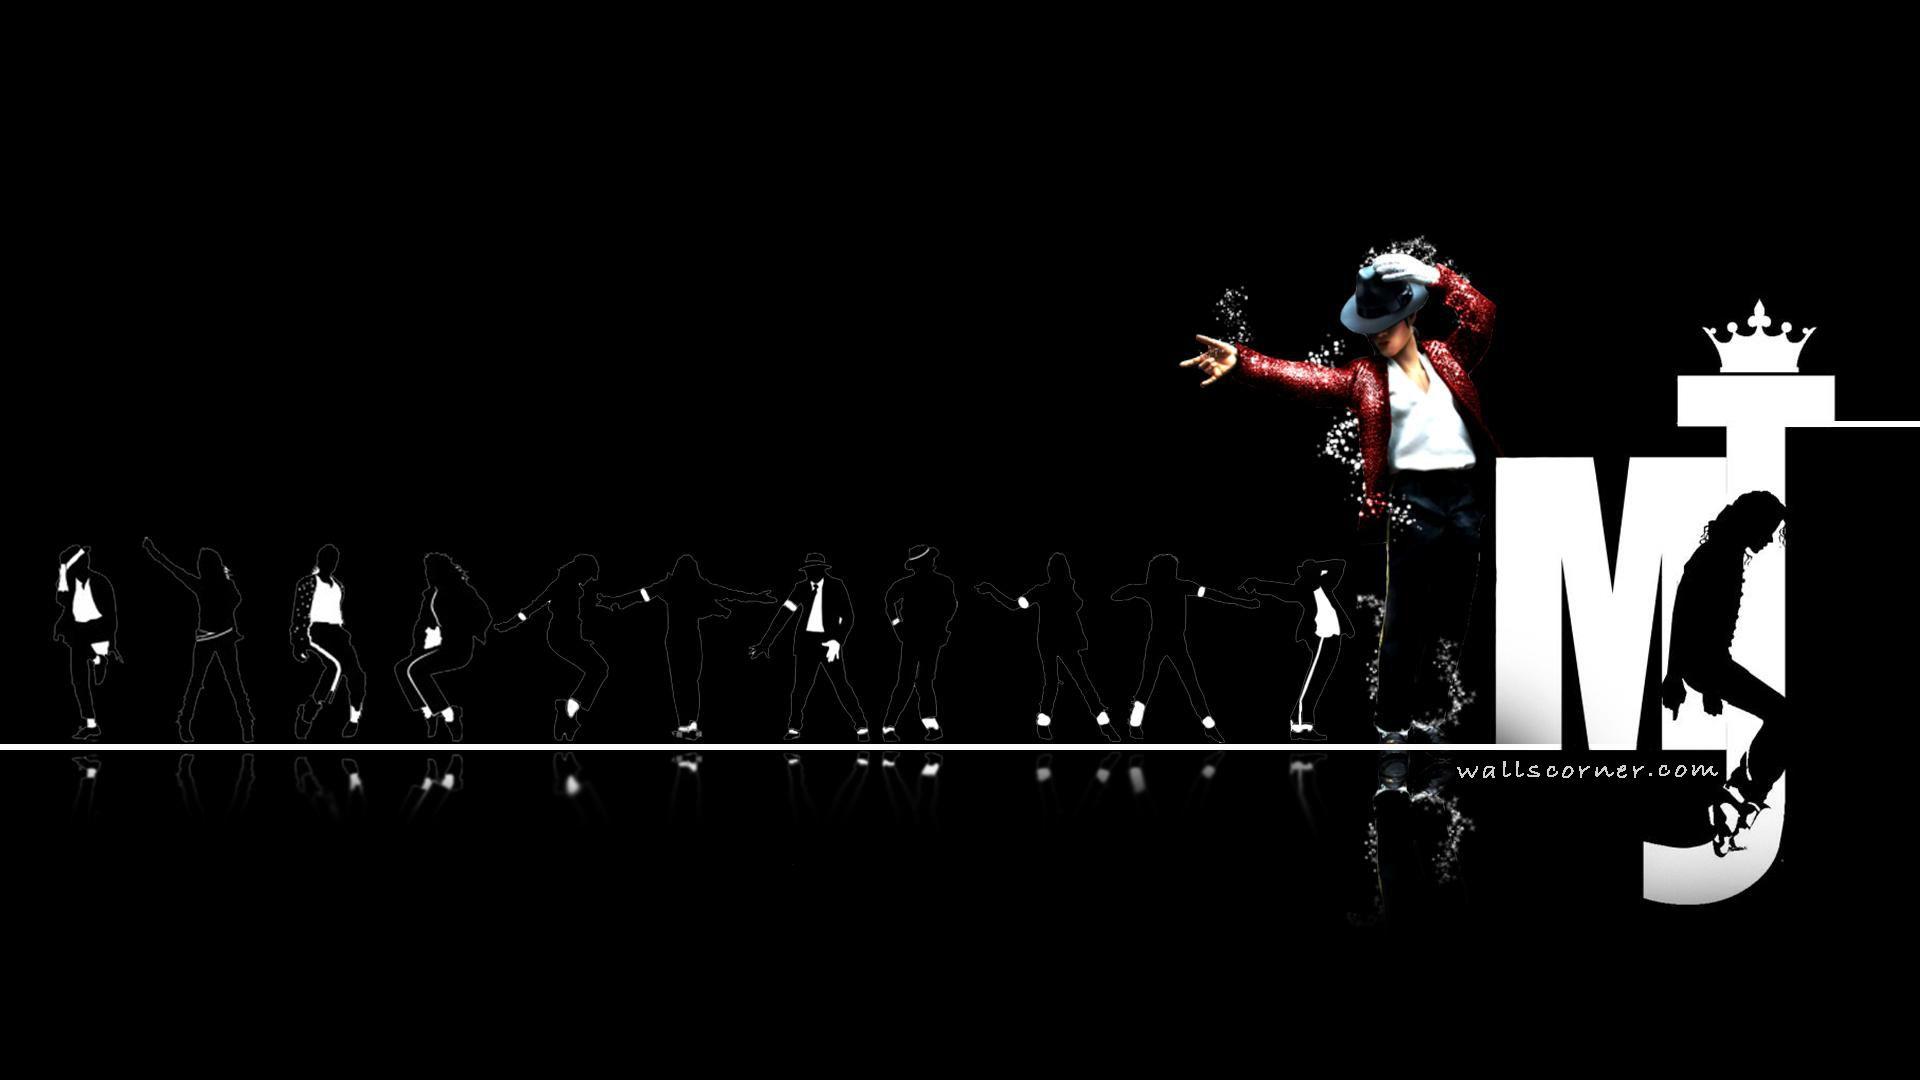 Michael Jackson Moonwalk Wallpaper Full HD For Desktop Wallpaper 1920 x 1080 px 623.08 KB moonwa. Michael jackson wallpaper, Michael jackson, Michael jackson bad